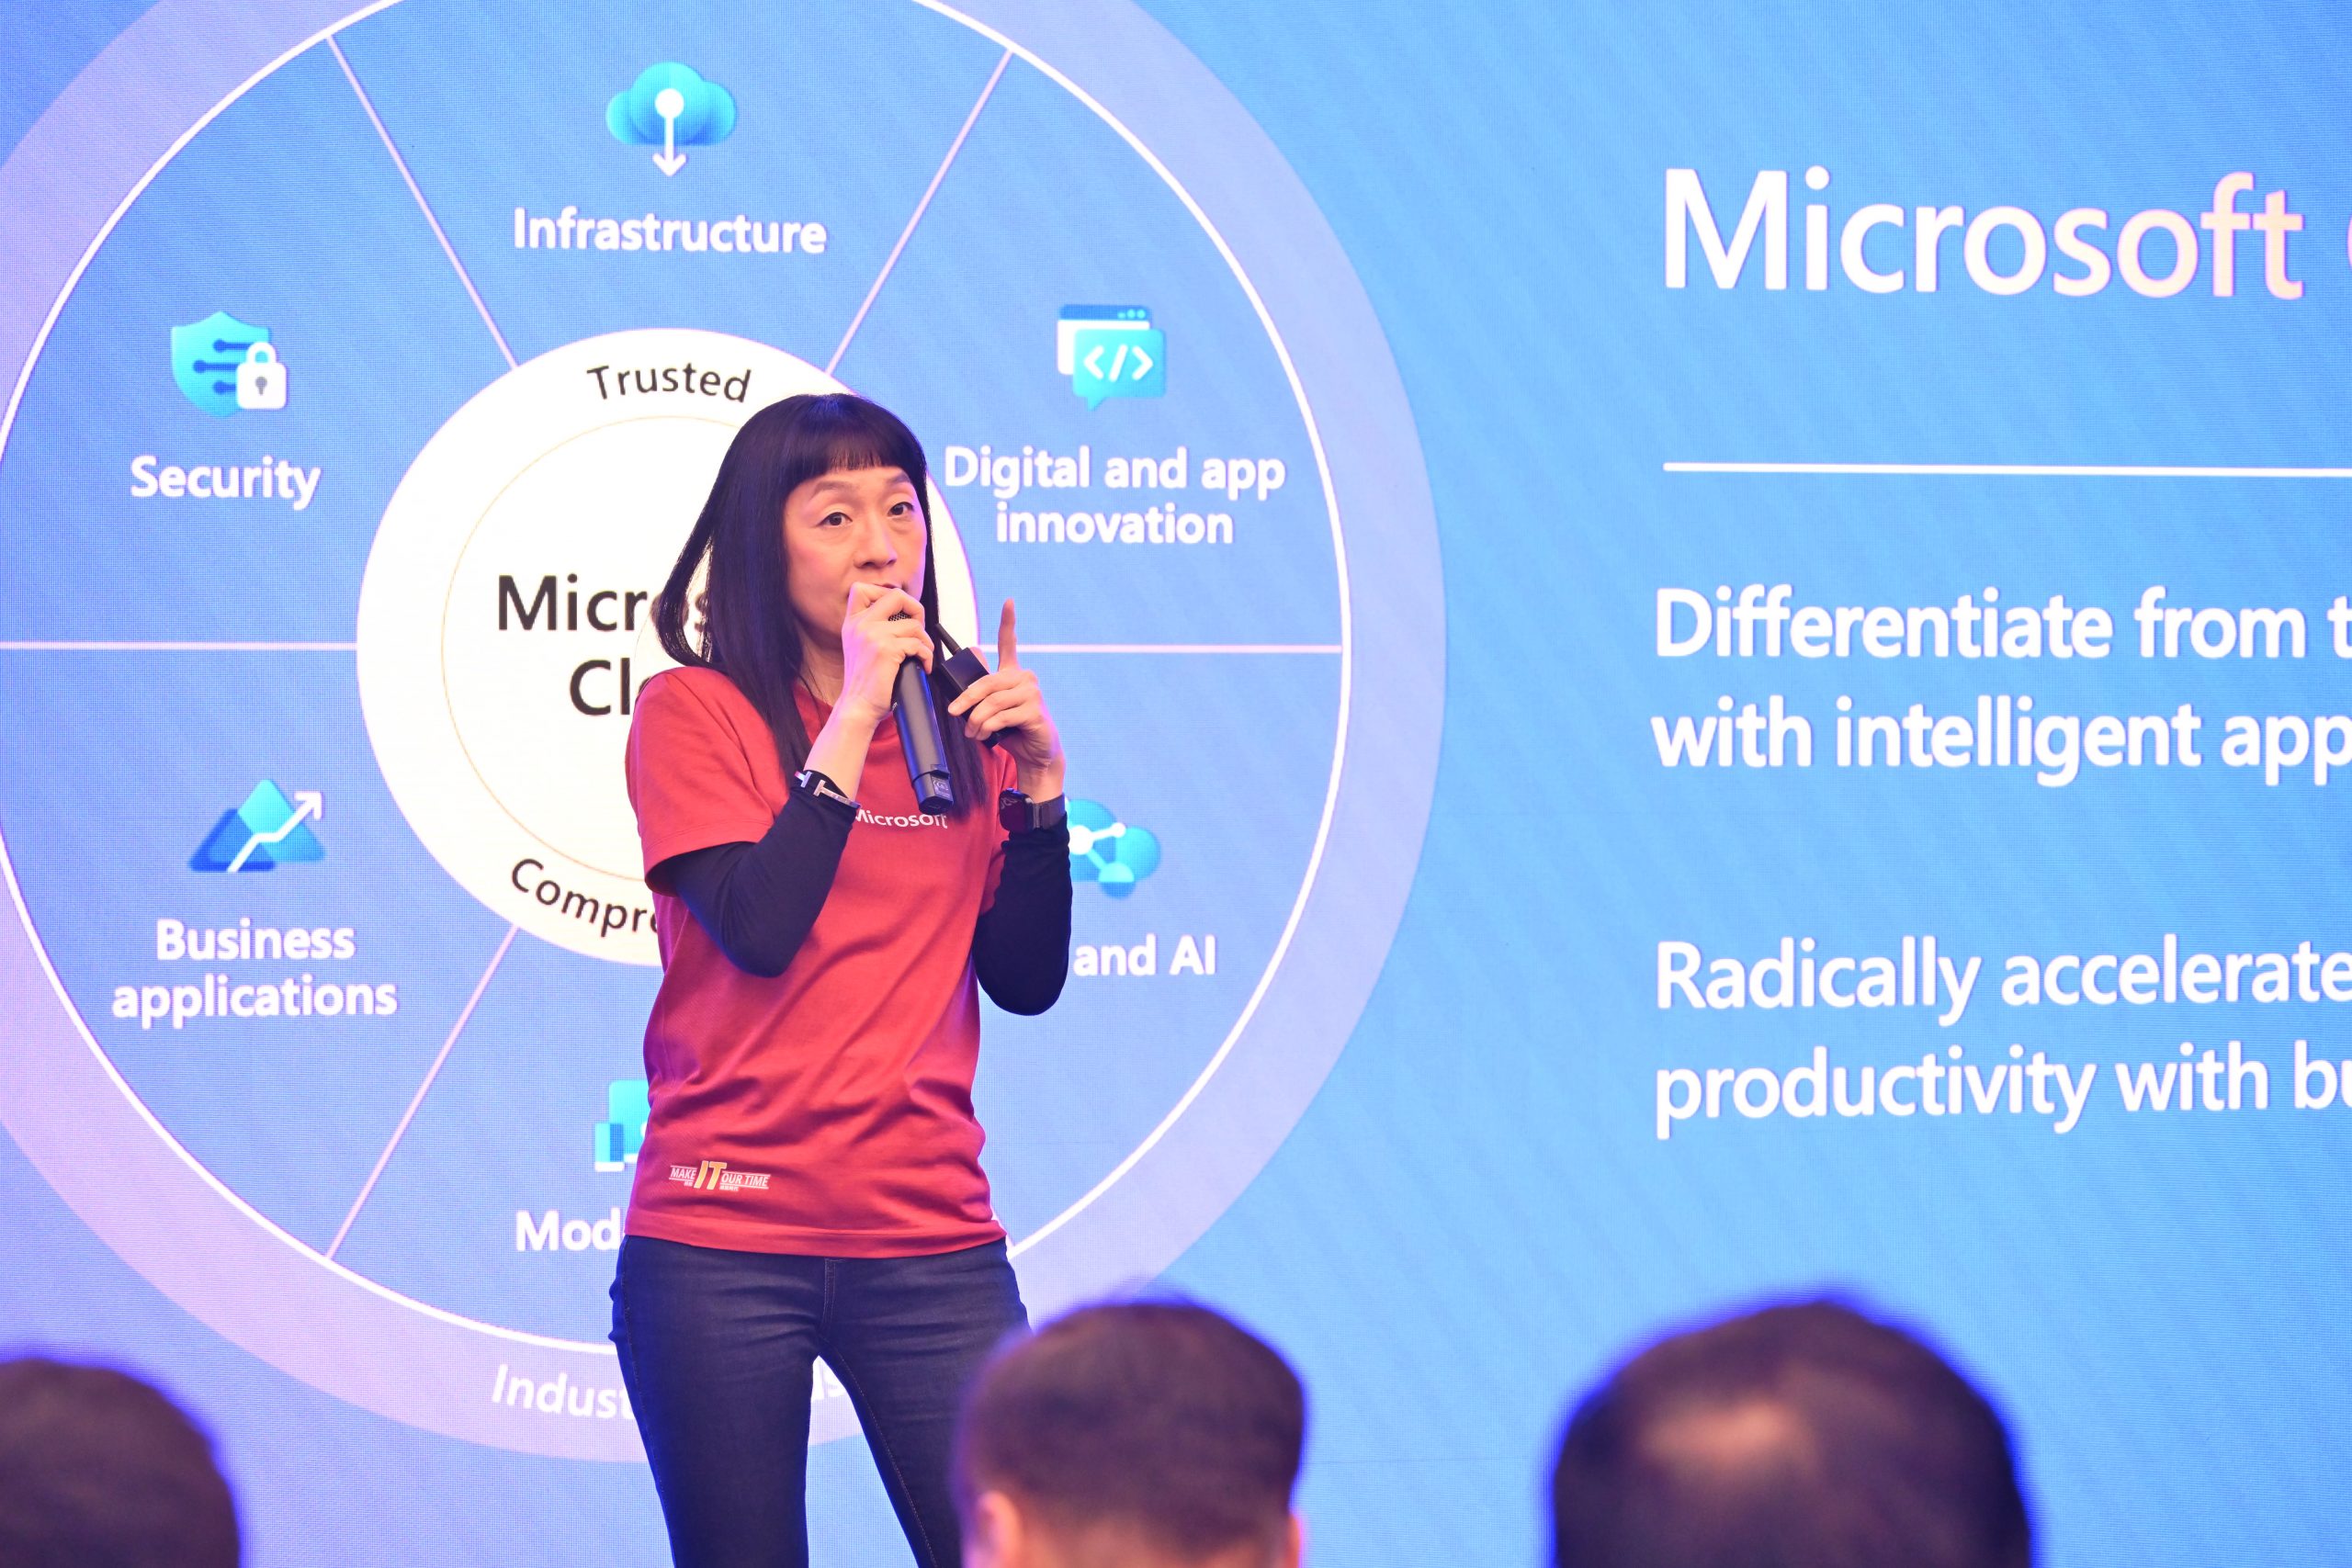 Microsoft 香港及澳門區總經理陳珊珊強調AI應用是企業於這多變的經濟環境保持競爭力的至勝關鍵。